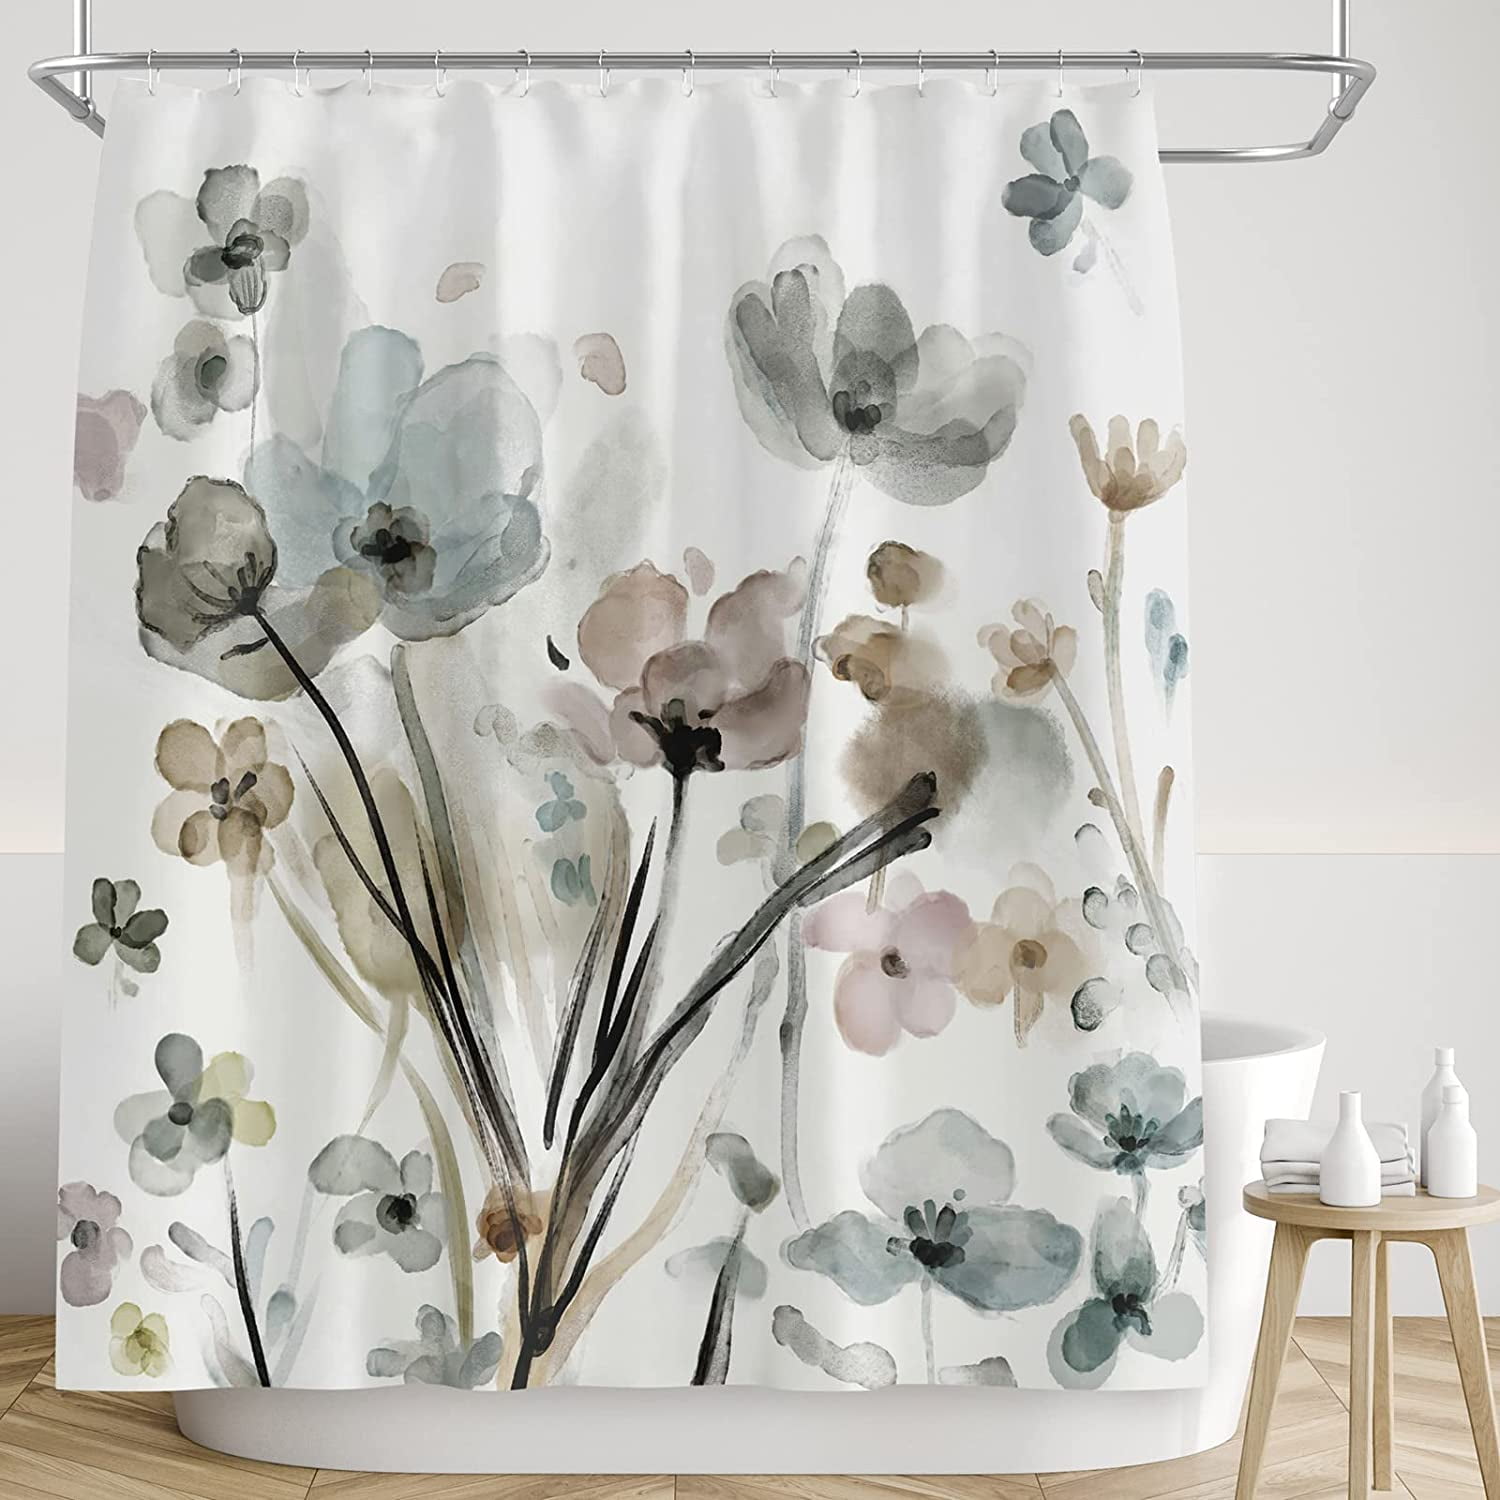 Happy Mothers' Day Waterproof Fabric Shower Curtain Bathroom Mat & 12 Hooks Set 